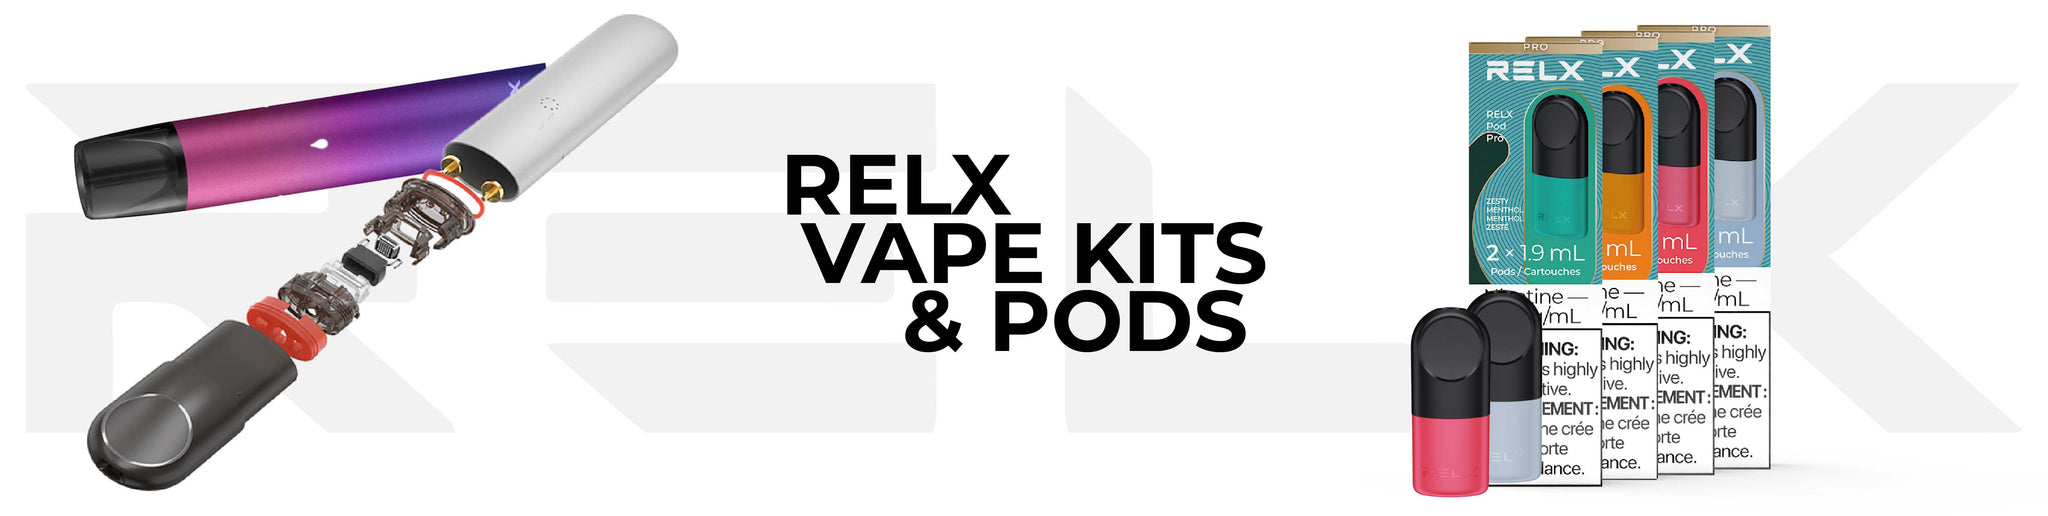 RELX Vape Pods and Kits